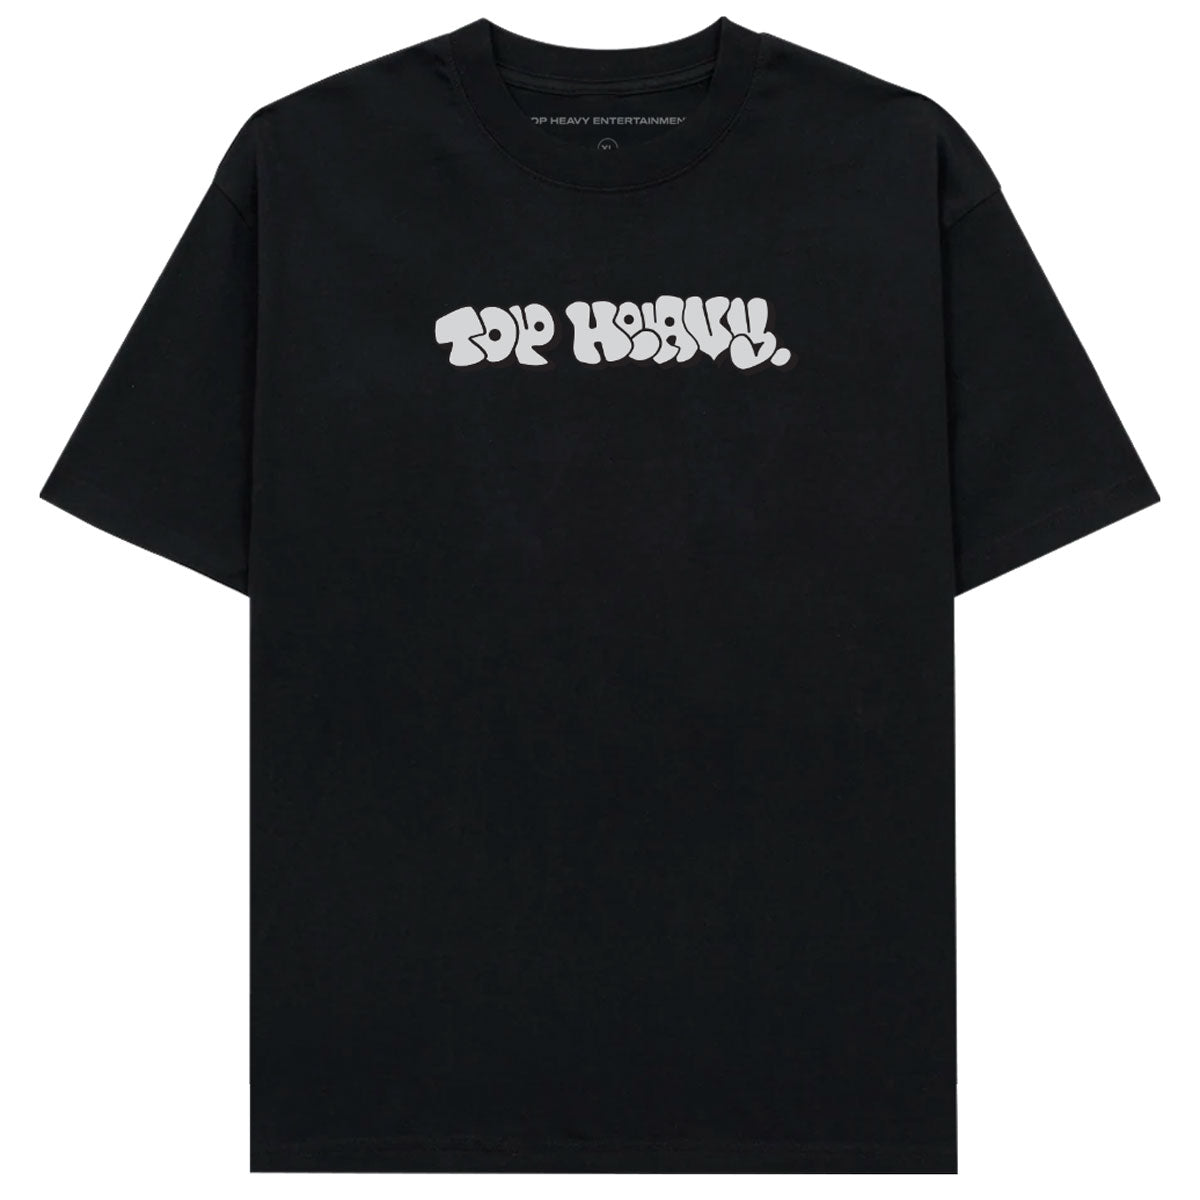 Top Heavy OG Throwie T-Shirt - Black/Gray image 1